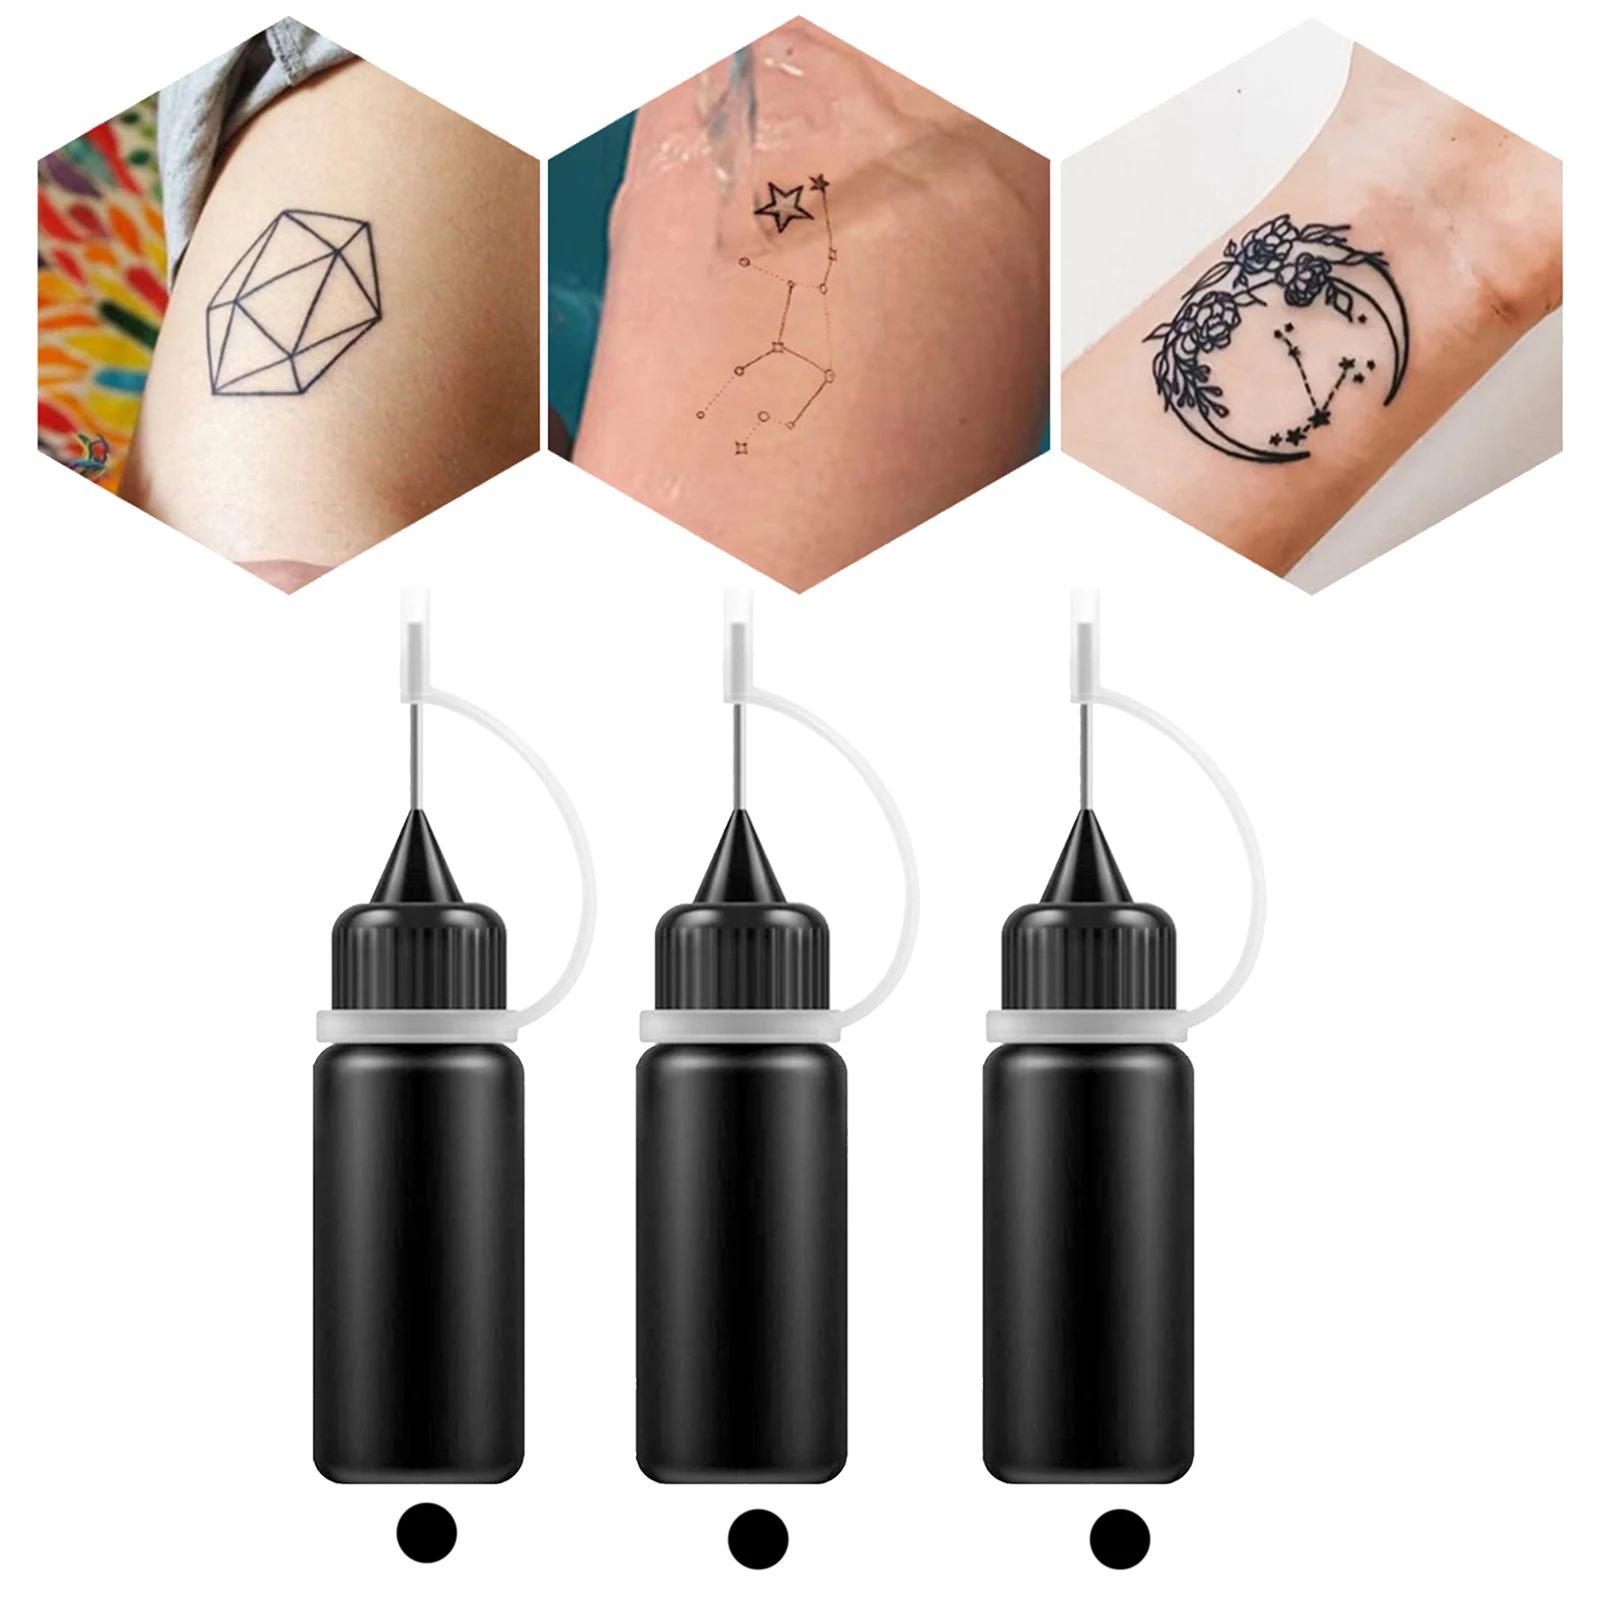 1Kit Temporary Tattoo Kit Semi Permanent Tattoo Paste Fake Tattoos Freehand Ink Body Art Painting Freehand Ink 